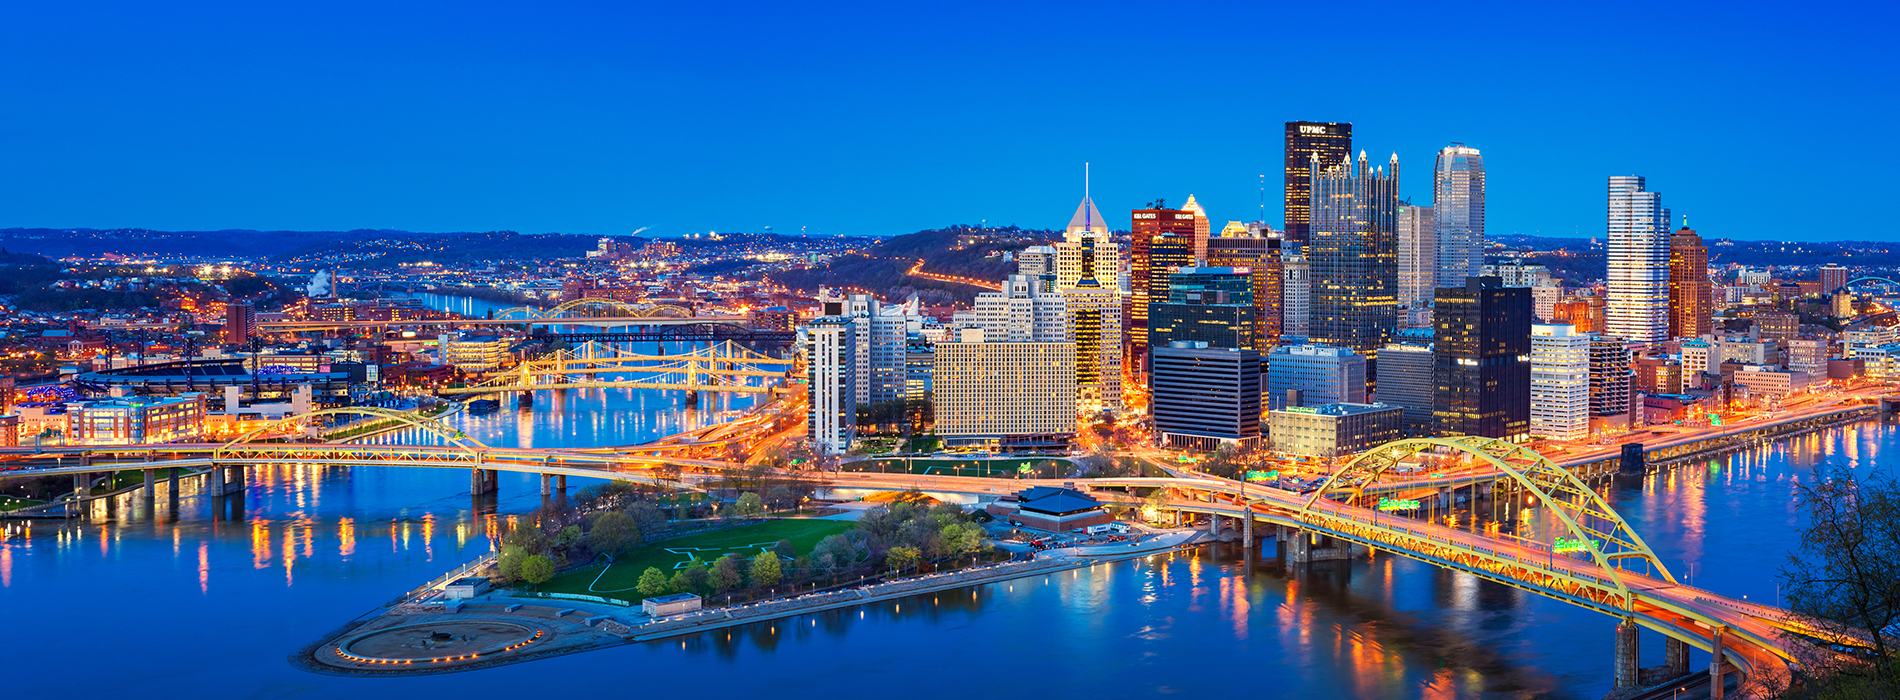 Downtown Pittsburgh, Pennsylvania